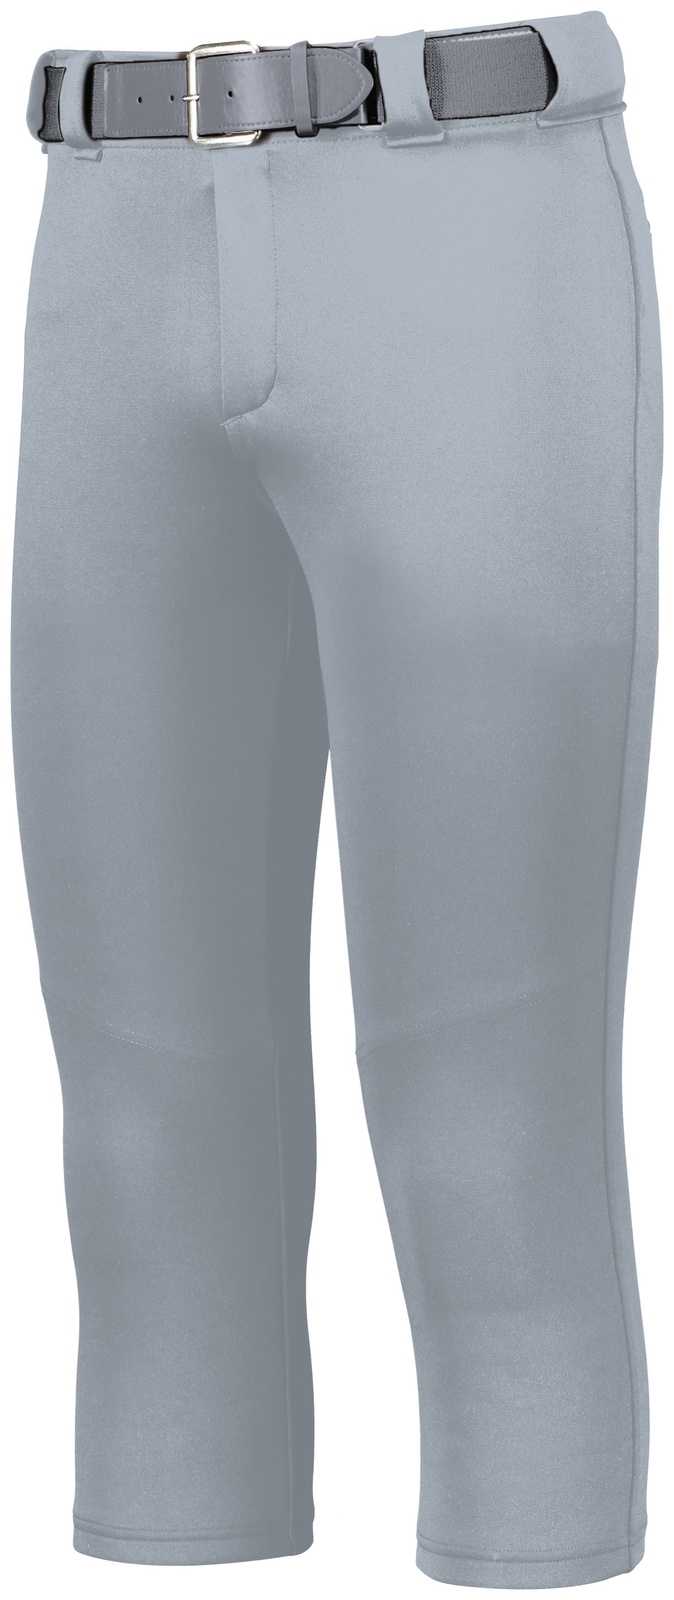 Augusta 1297 Ladies Slideflex Softball Pant - Blue Grey - HIT a Double